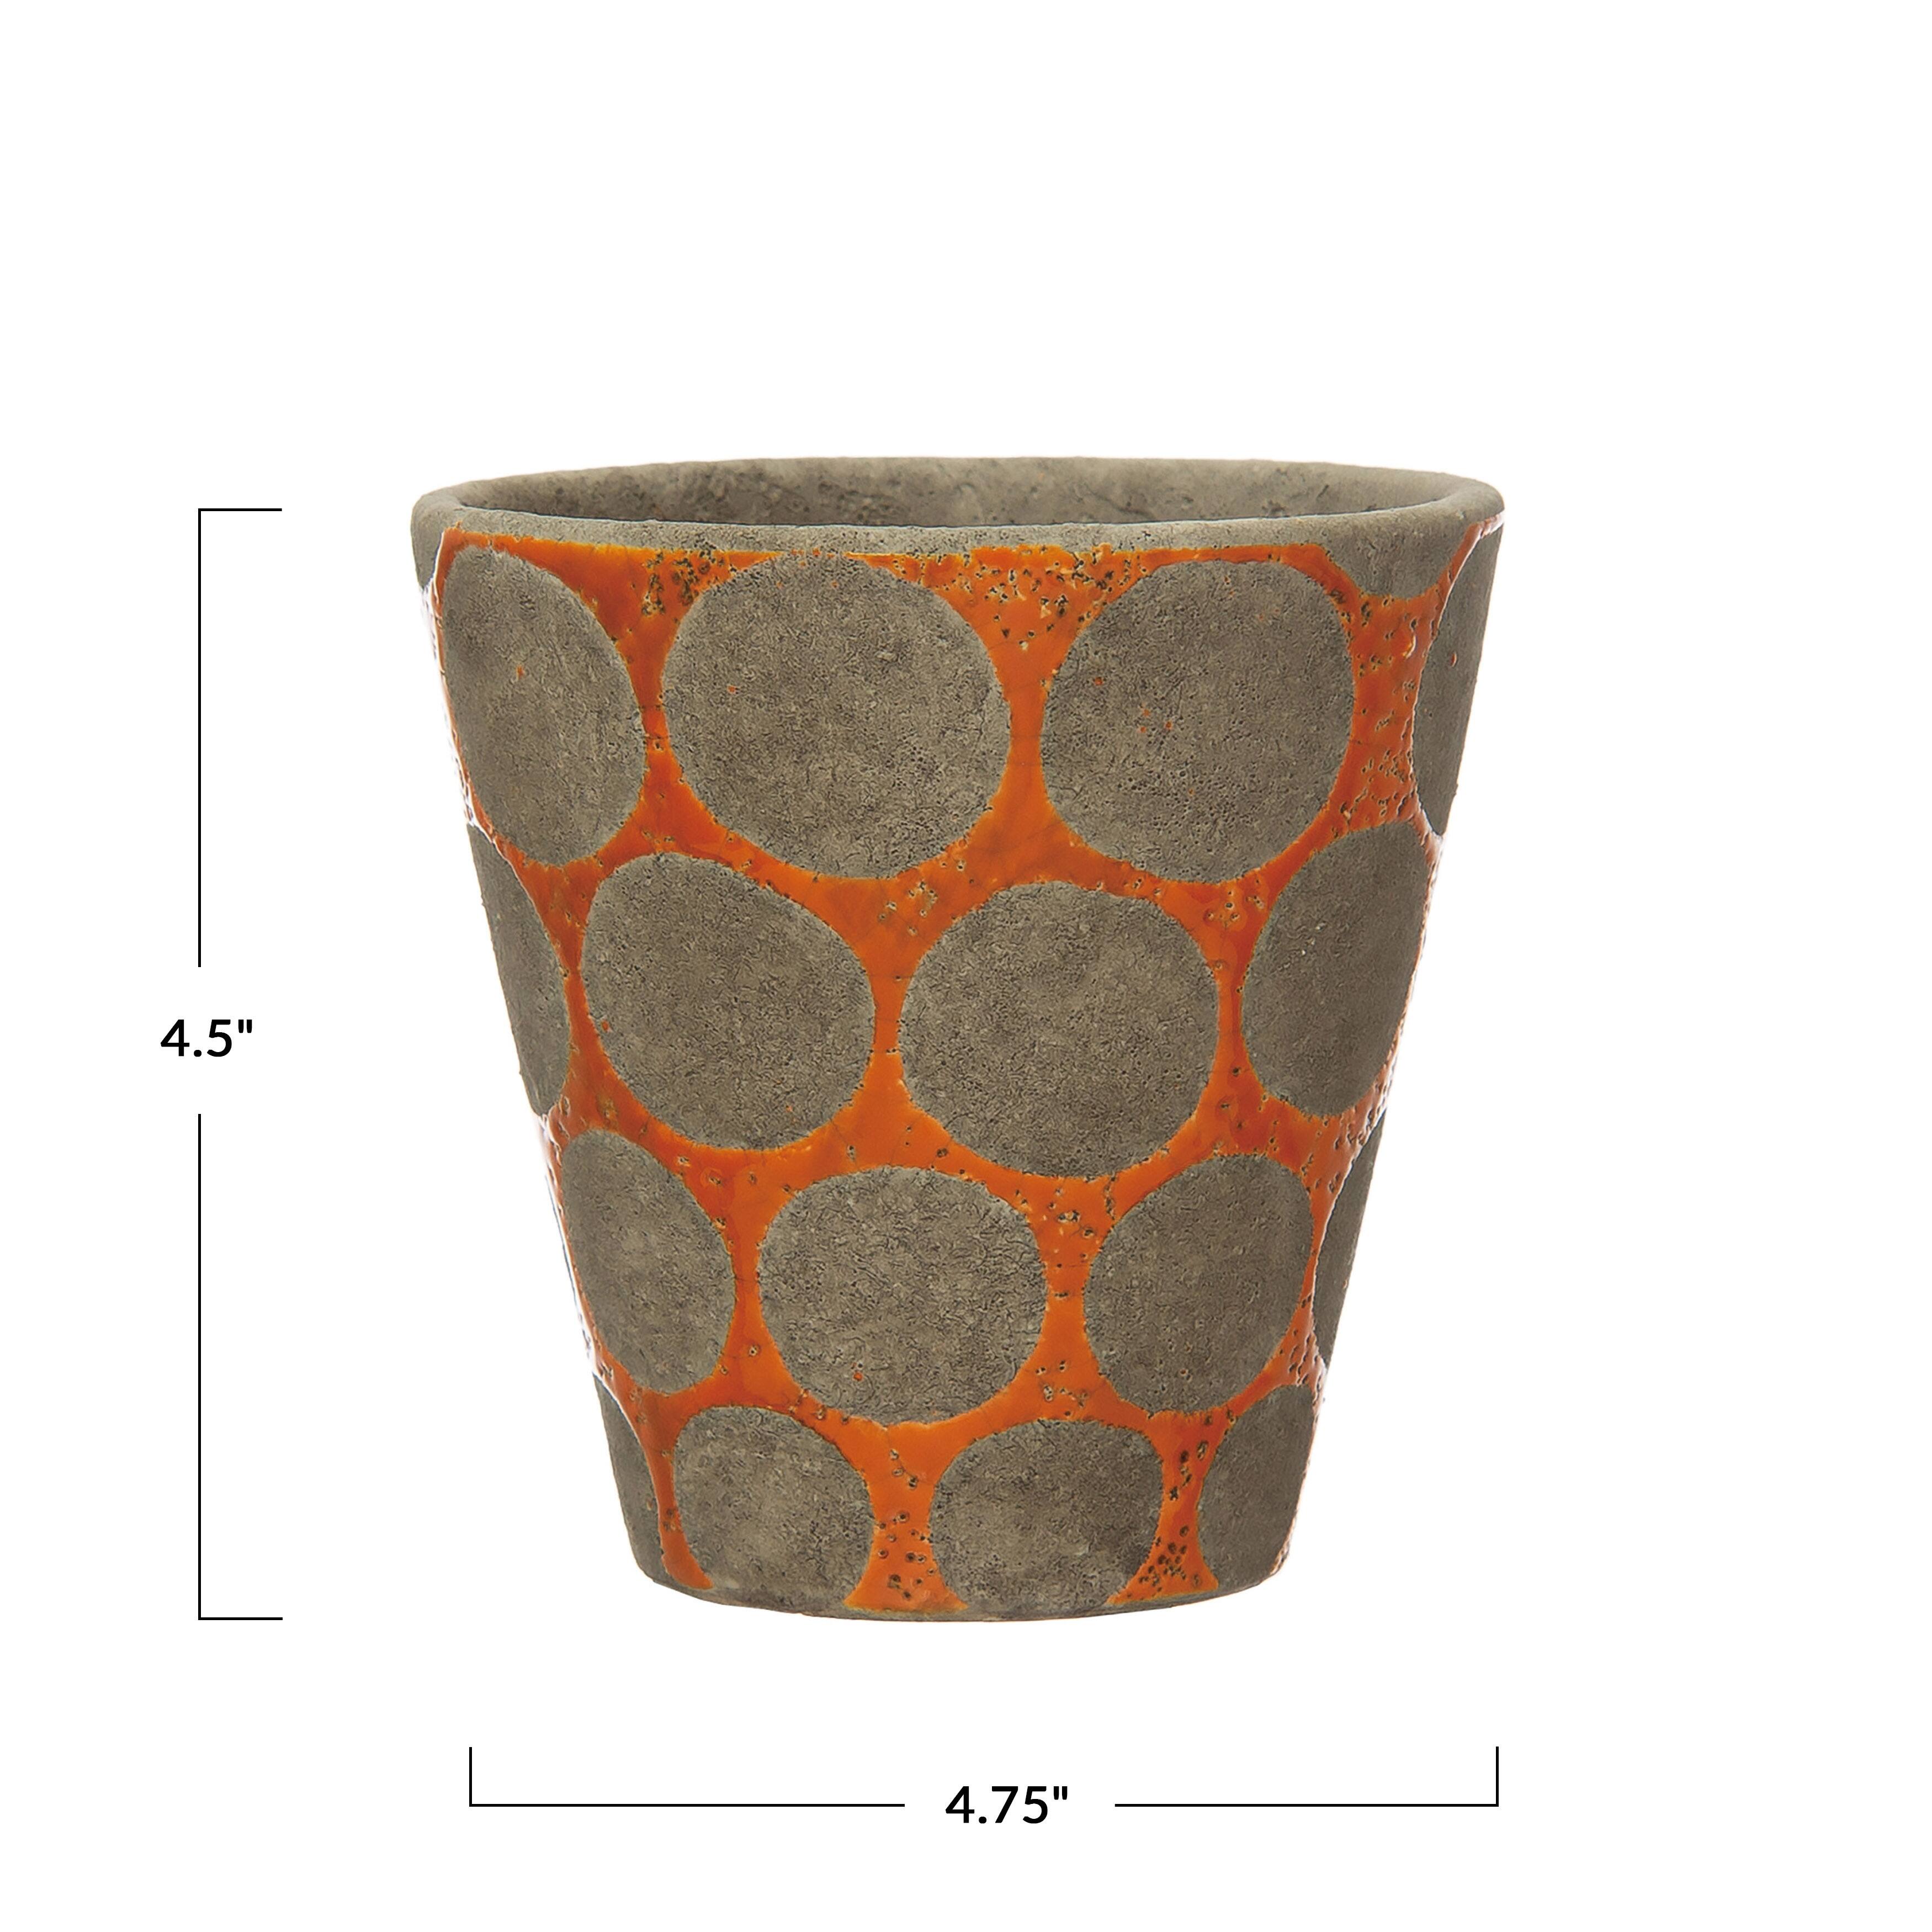 Terra-cotta Vase with Wax Relief Dots